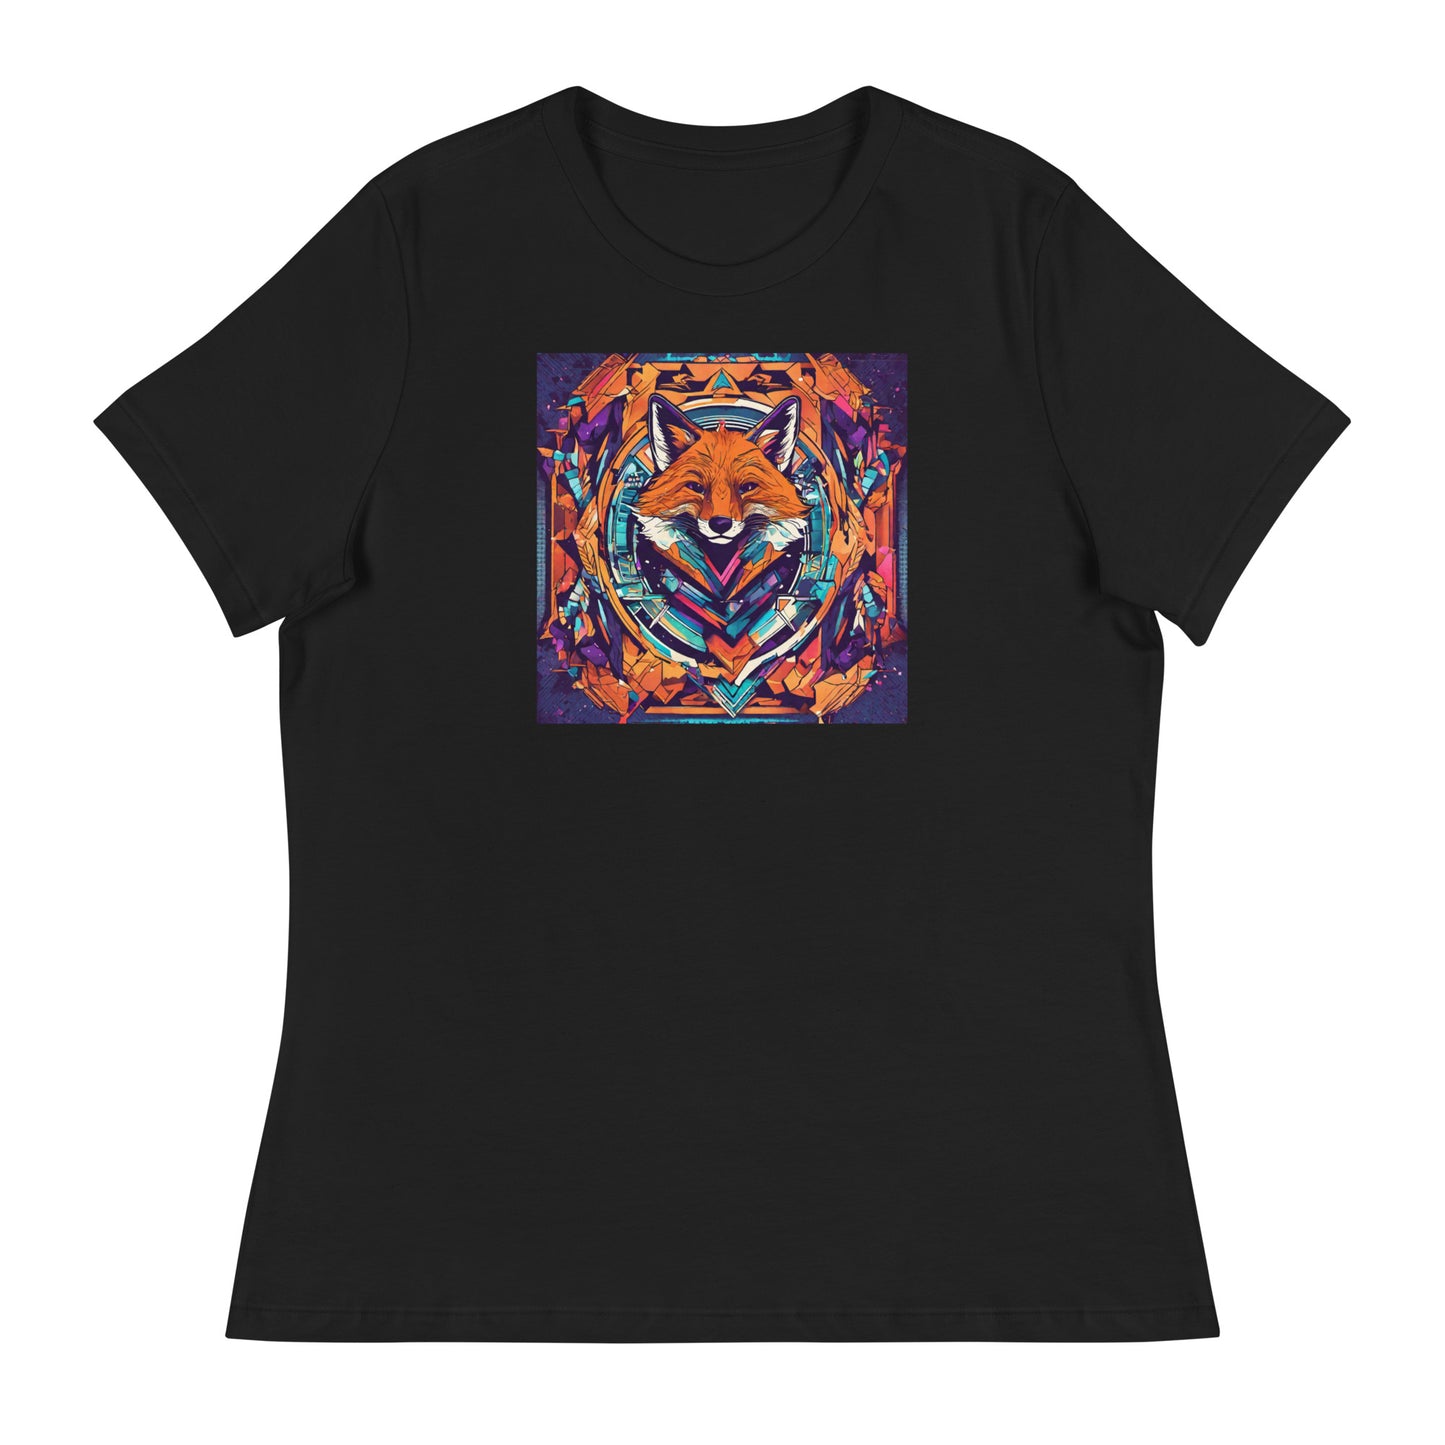 Colorful Fox Women's T-Shirt Black